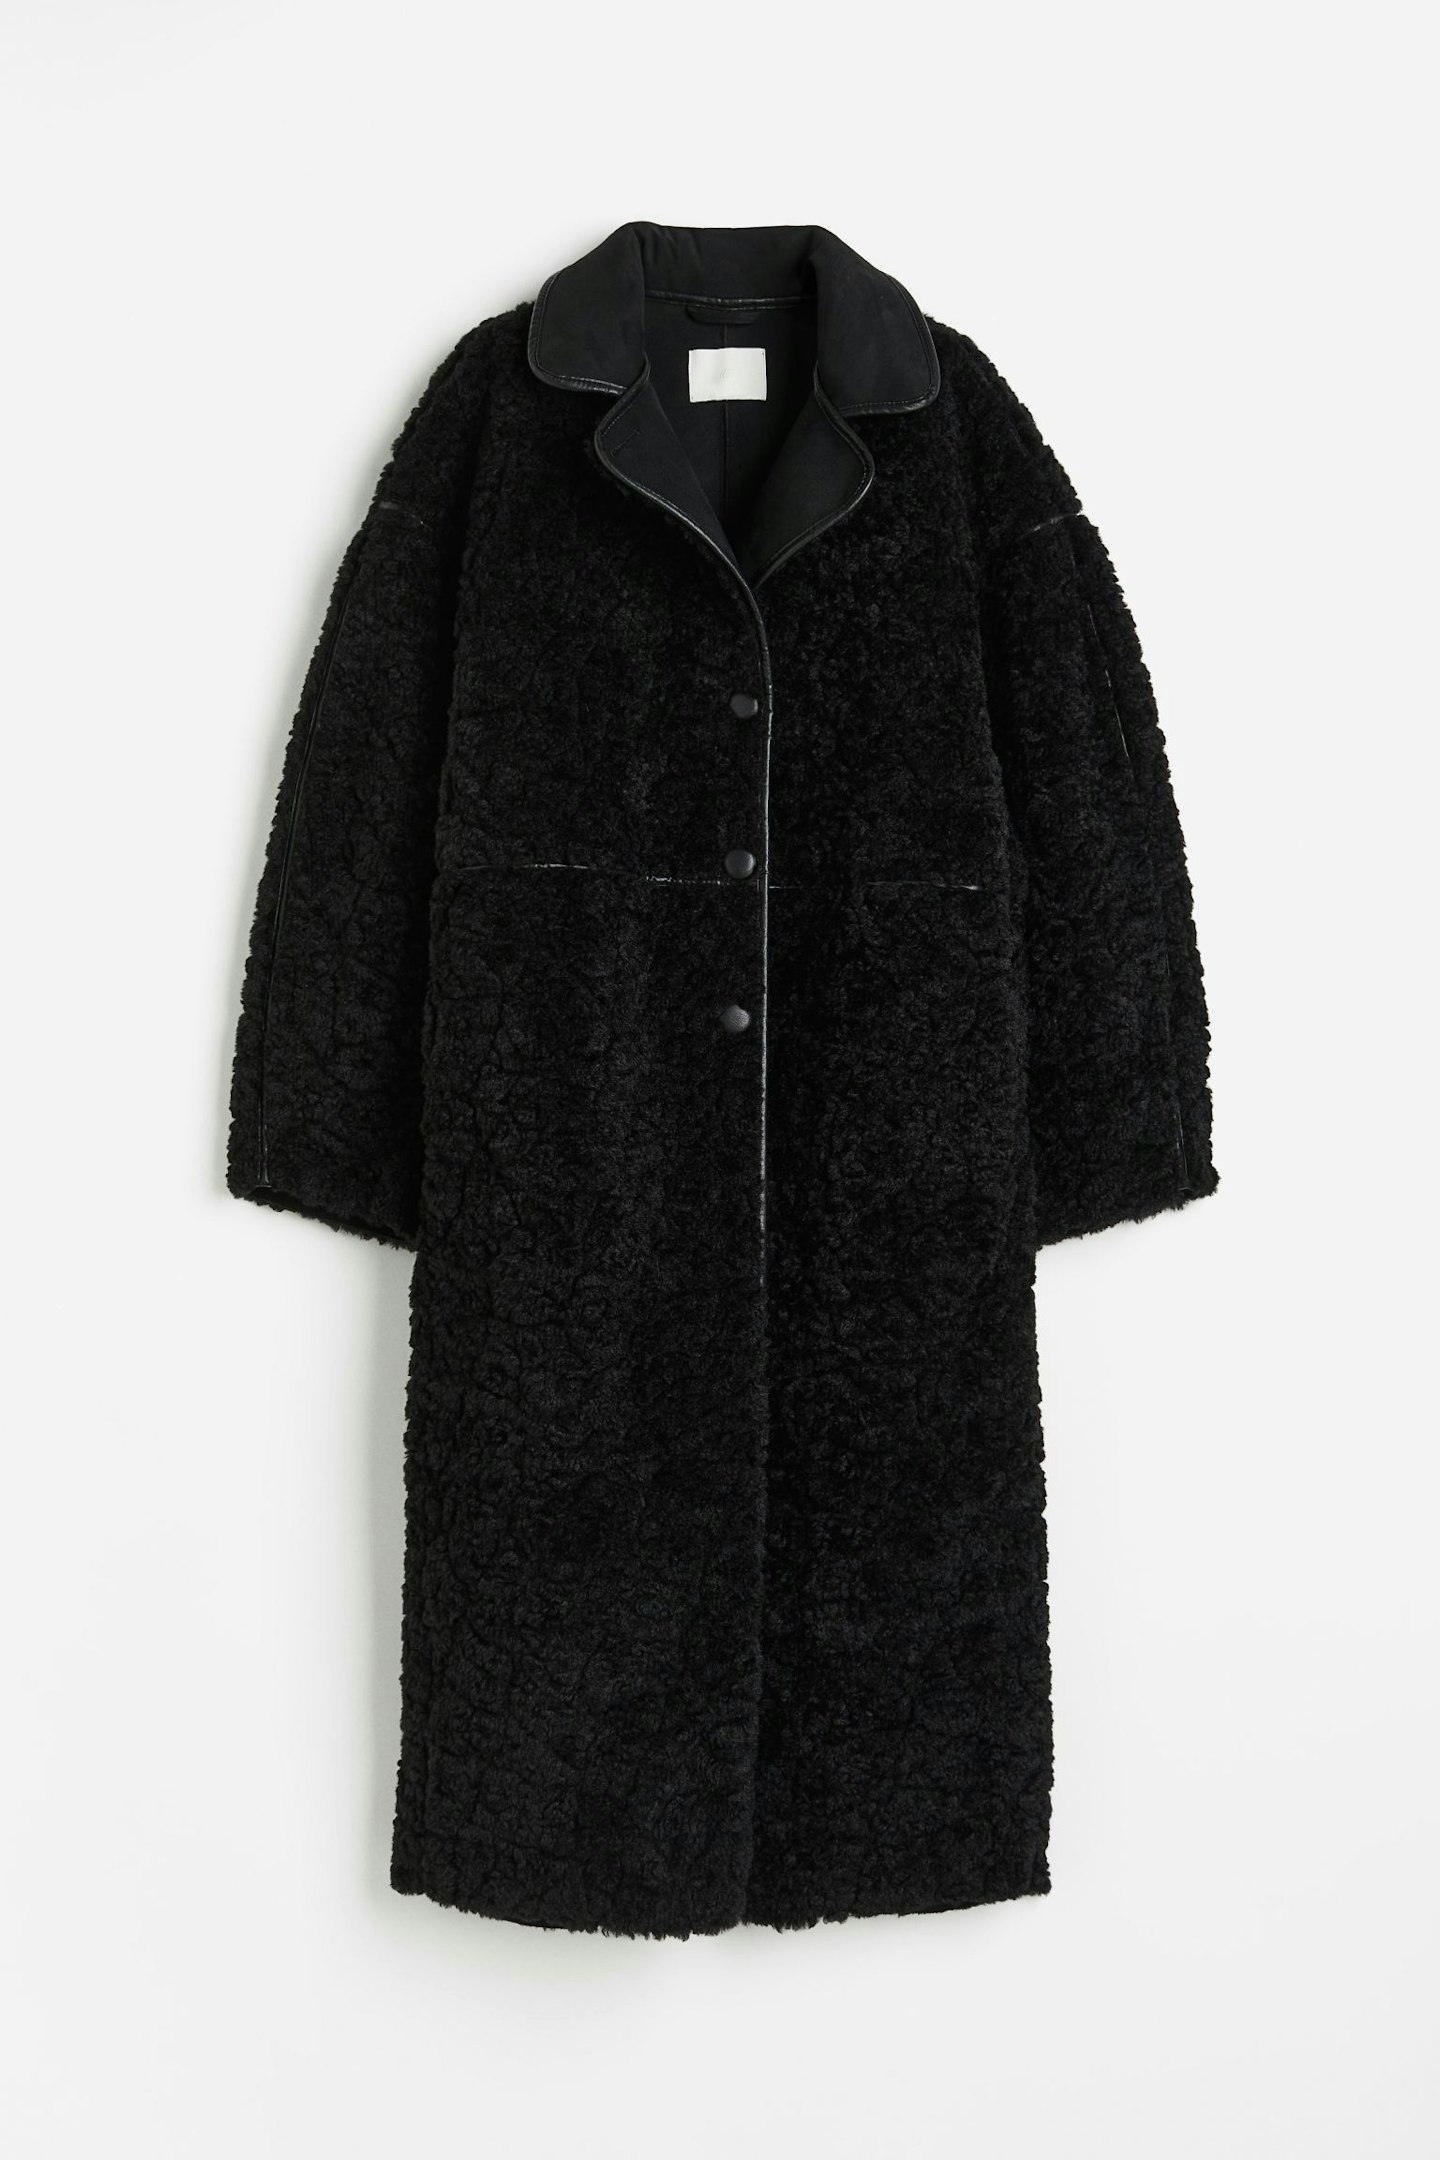 H&M shearling coat